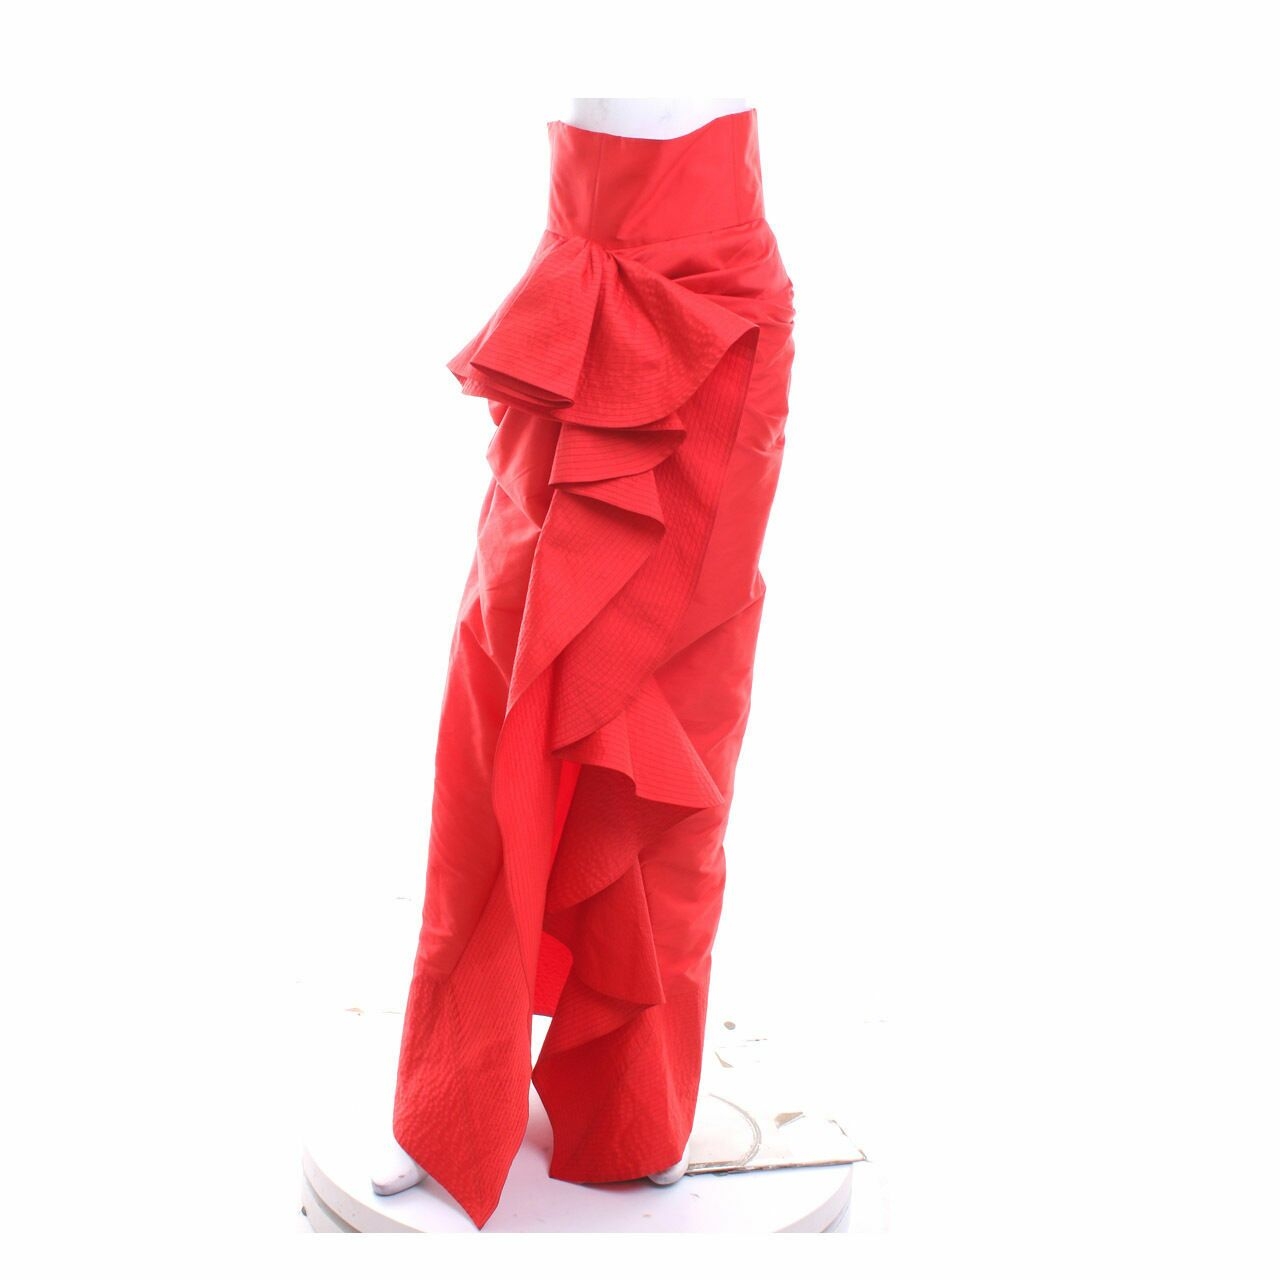 Sapto Djojokartiko Red Ruffle Maxi Skirt